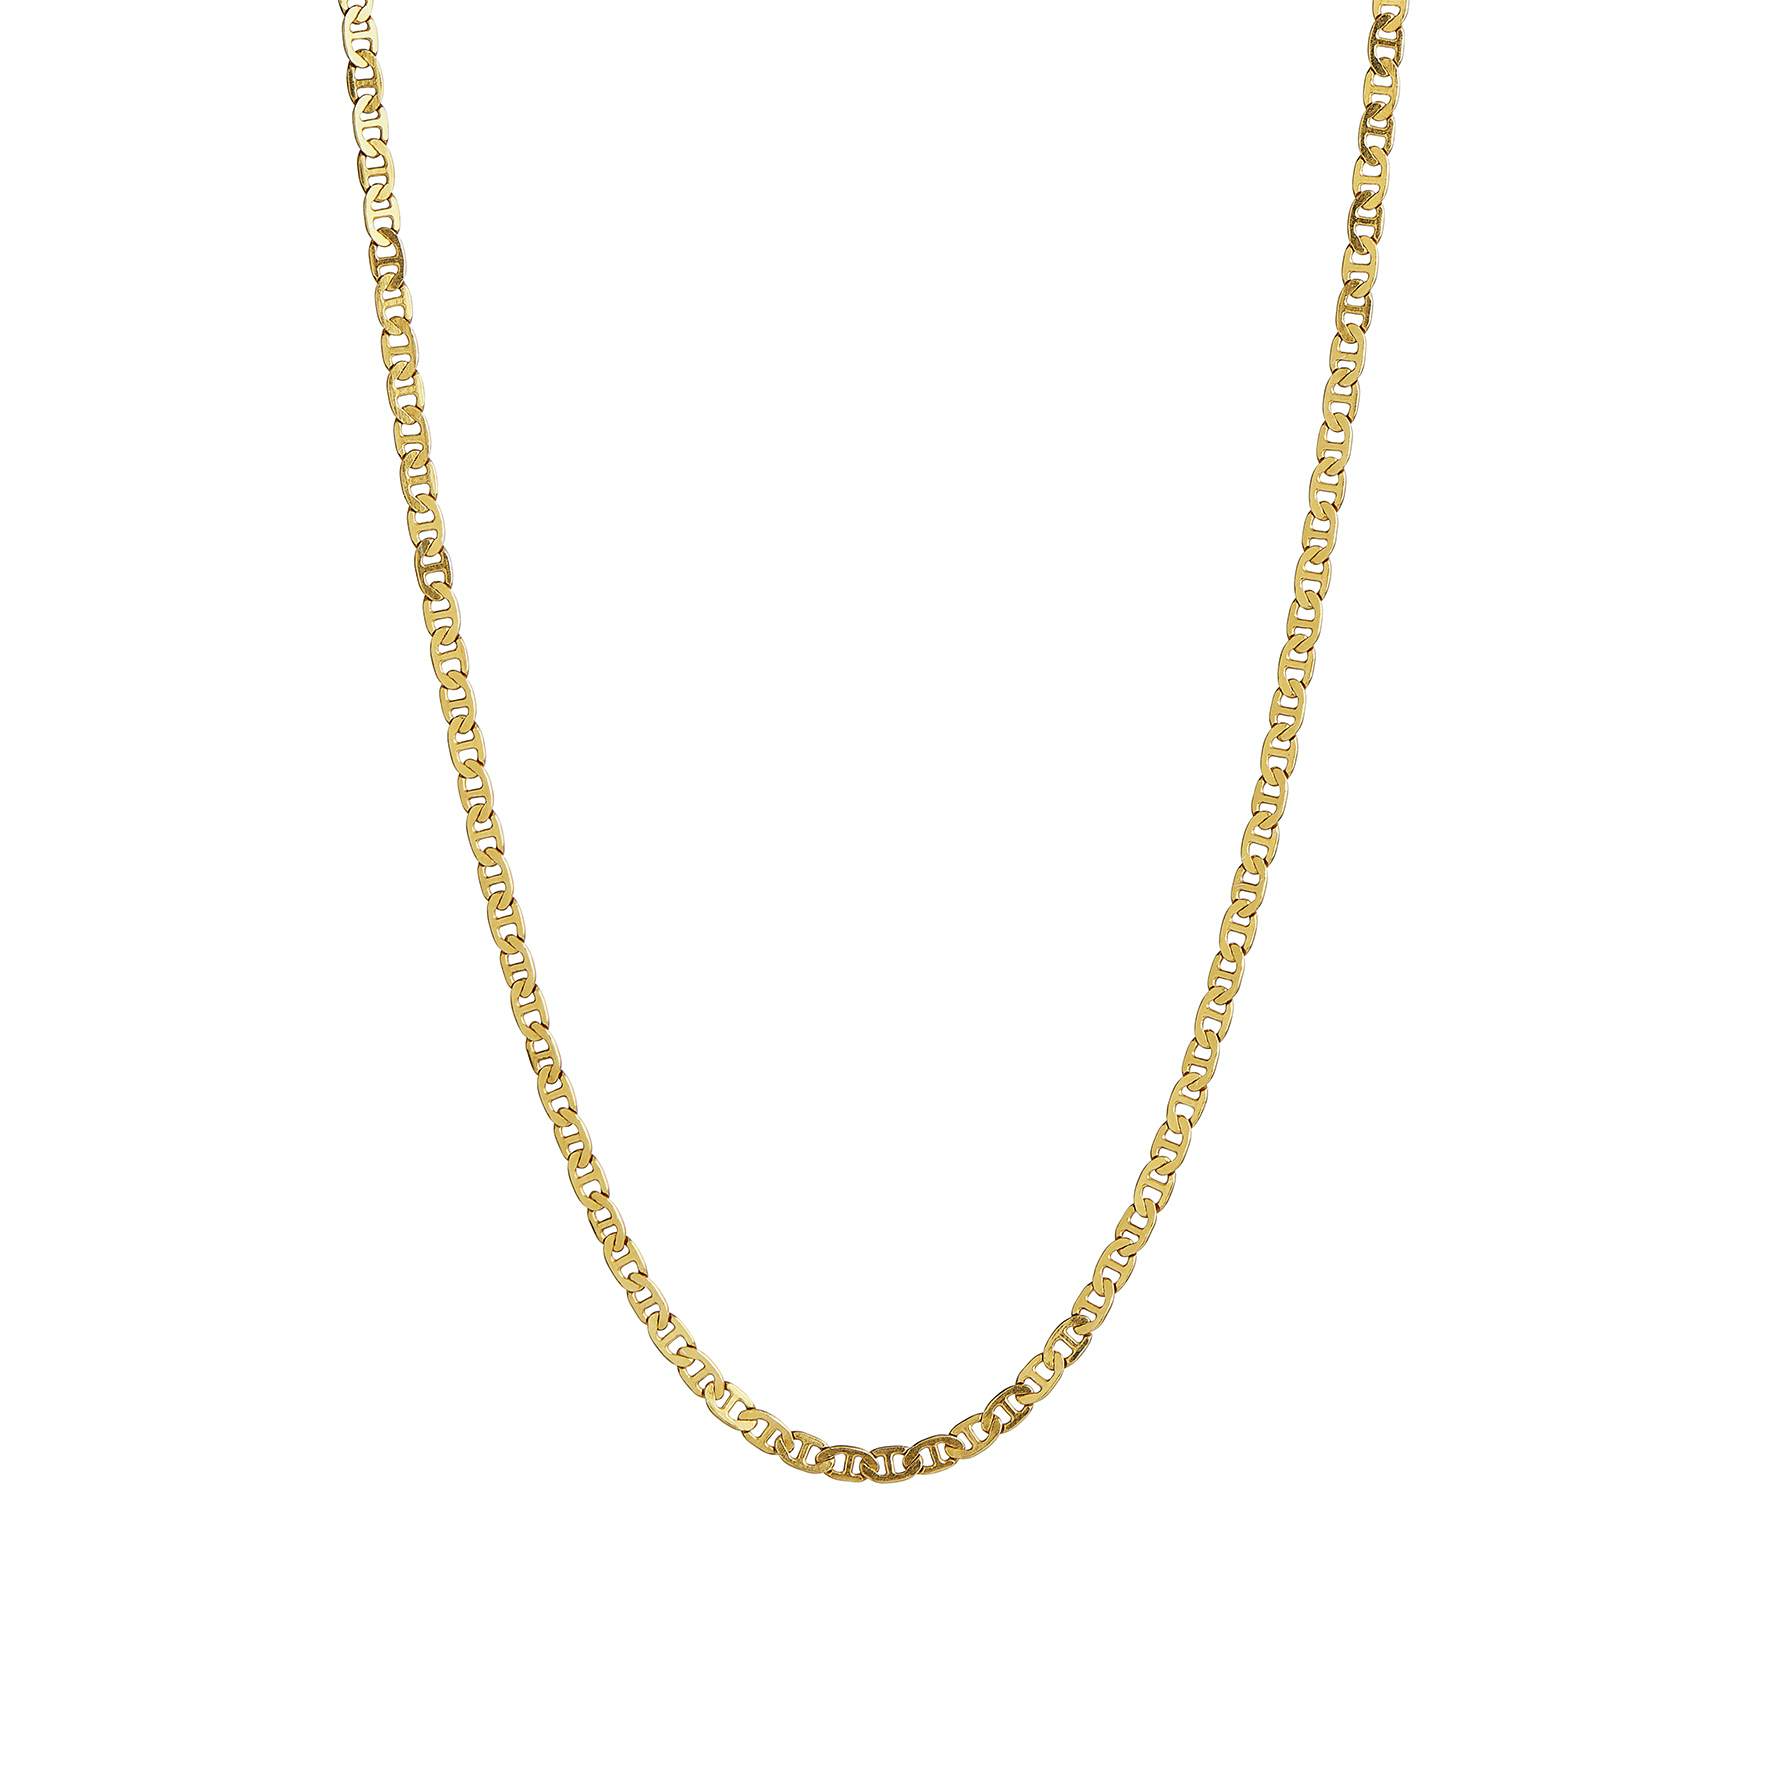 Petit Link Pendant Chain fra STINE A Jewelry i Forgyldt-Sølv Sterling 925